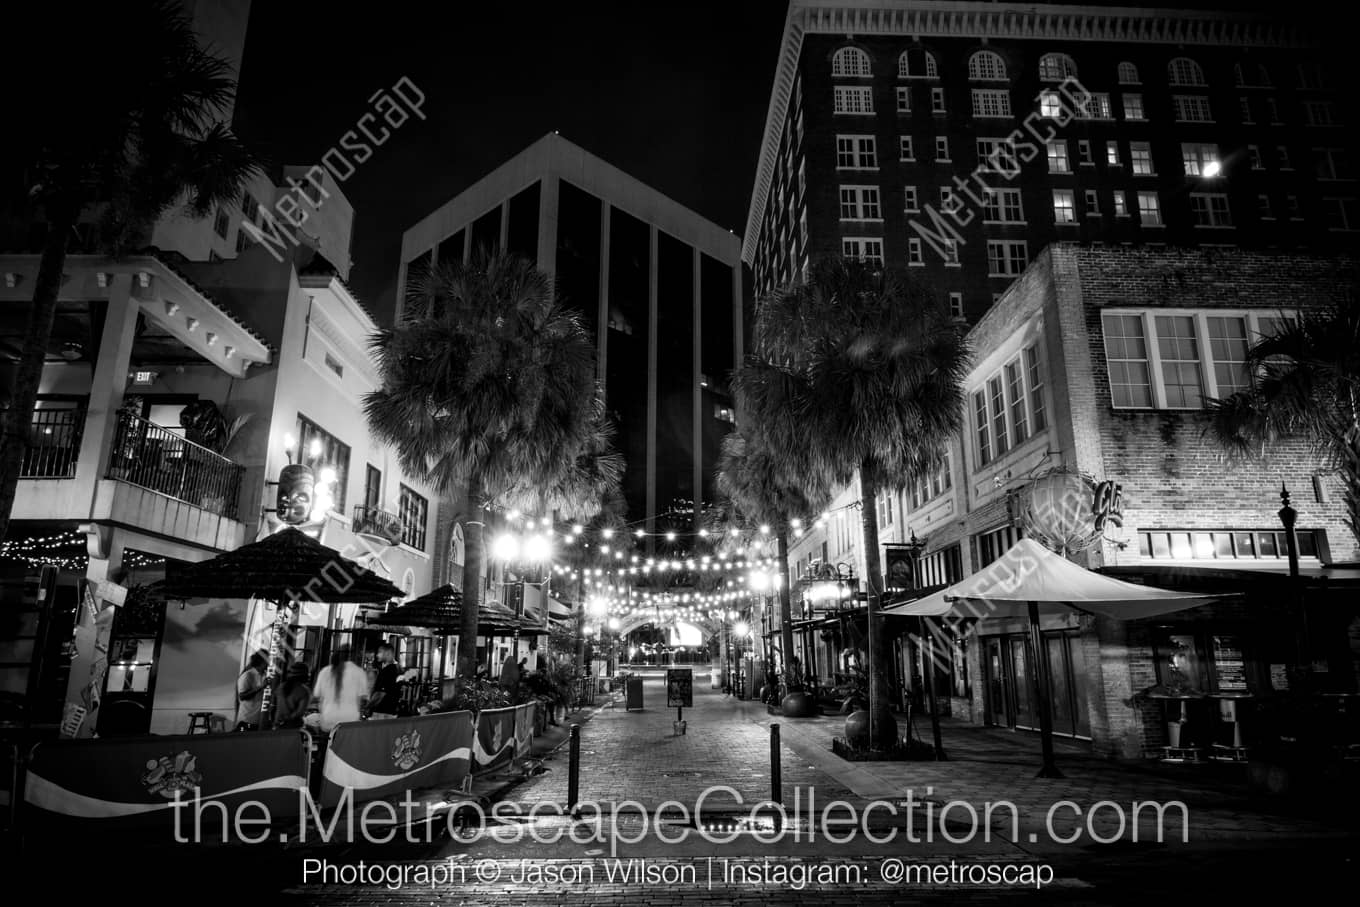 Orlando Florida Picture at Night